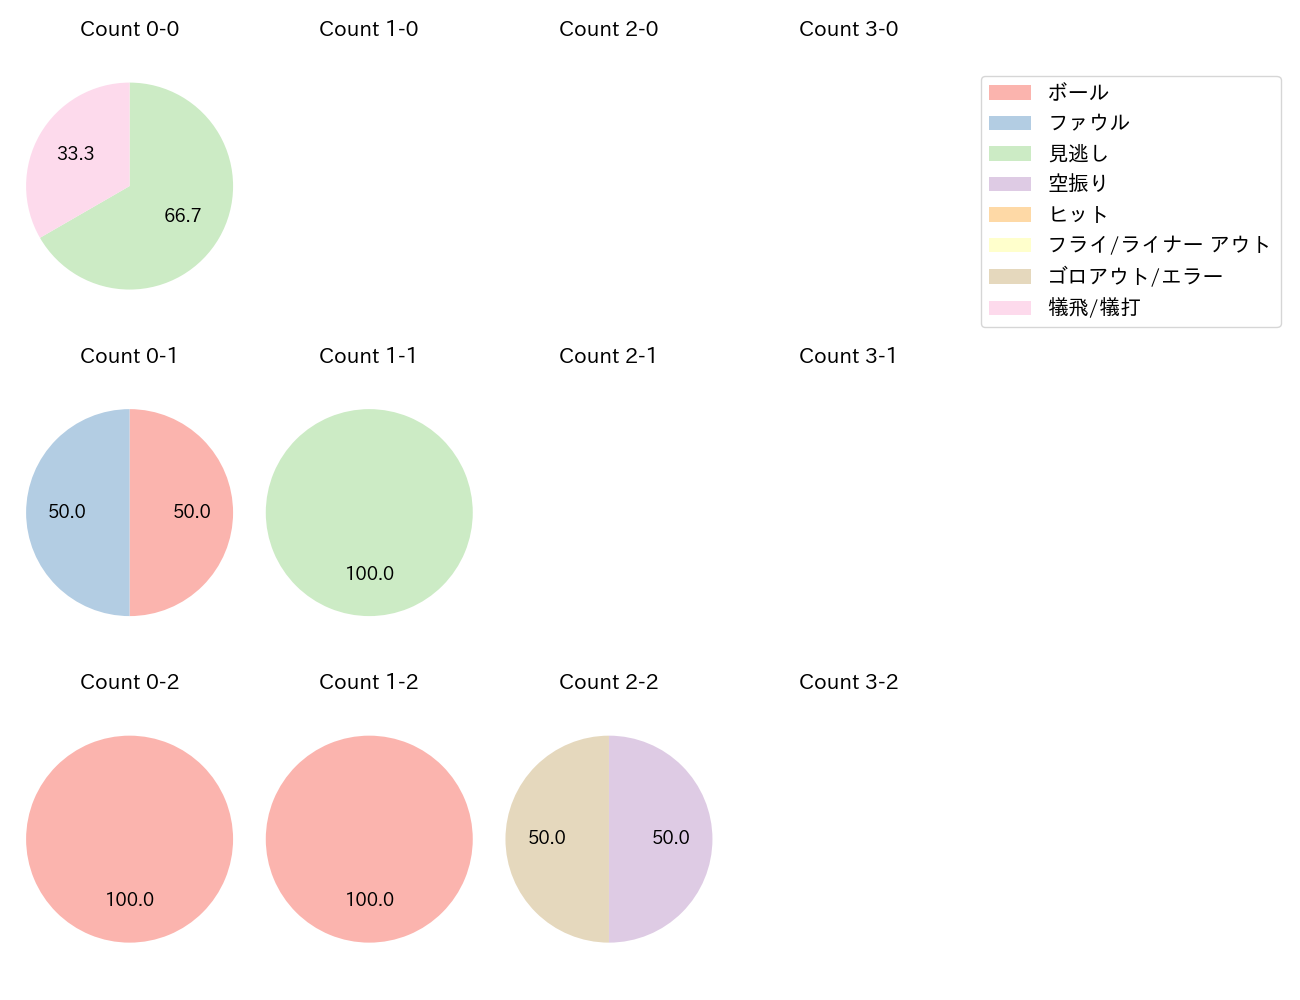 高橋 奎二の球数分布(2022年6月)